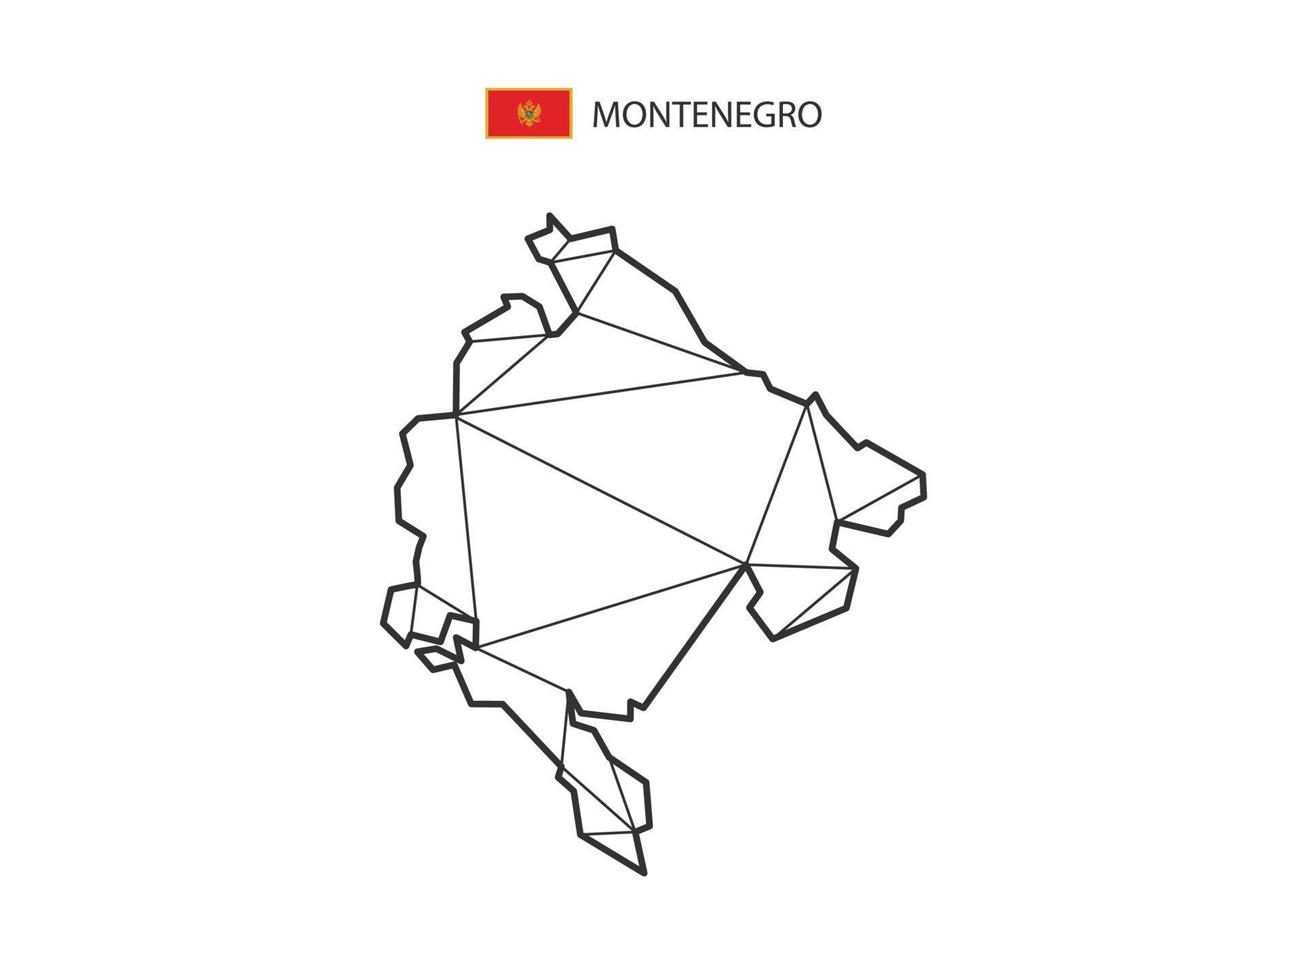 estilo de mapa de triângulos de mosaico de montenegro isolado em um fundo branco. design abstrato para vetor. vetor